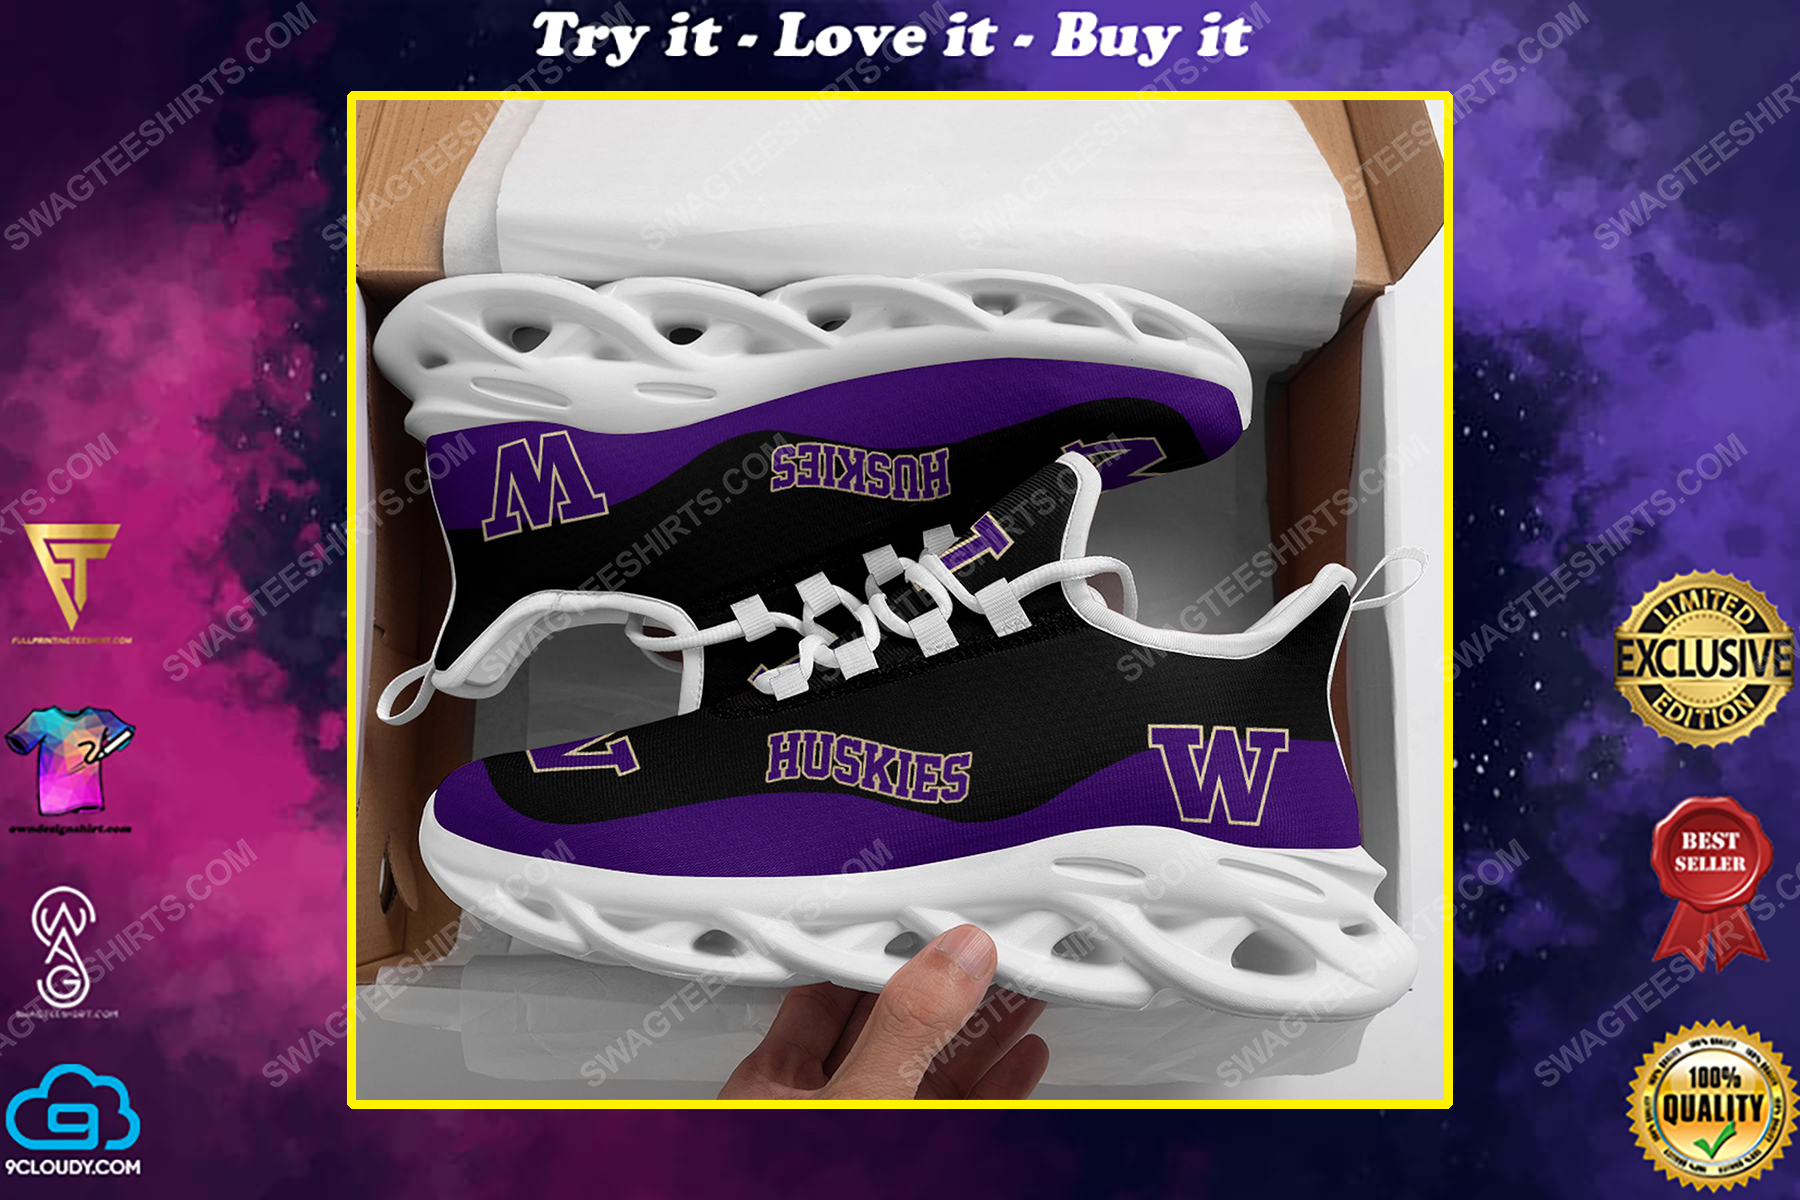 The washington huskies football team max soul shoes